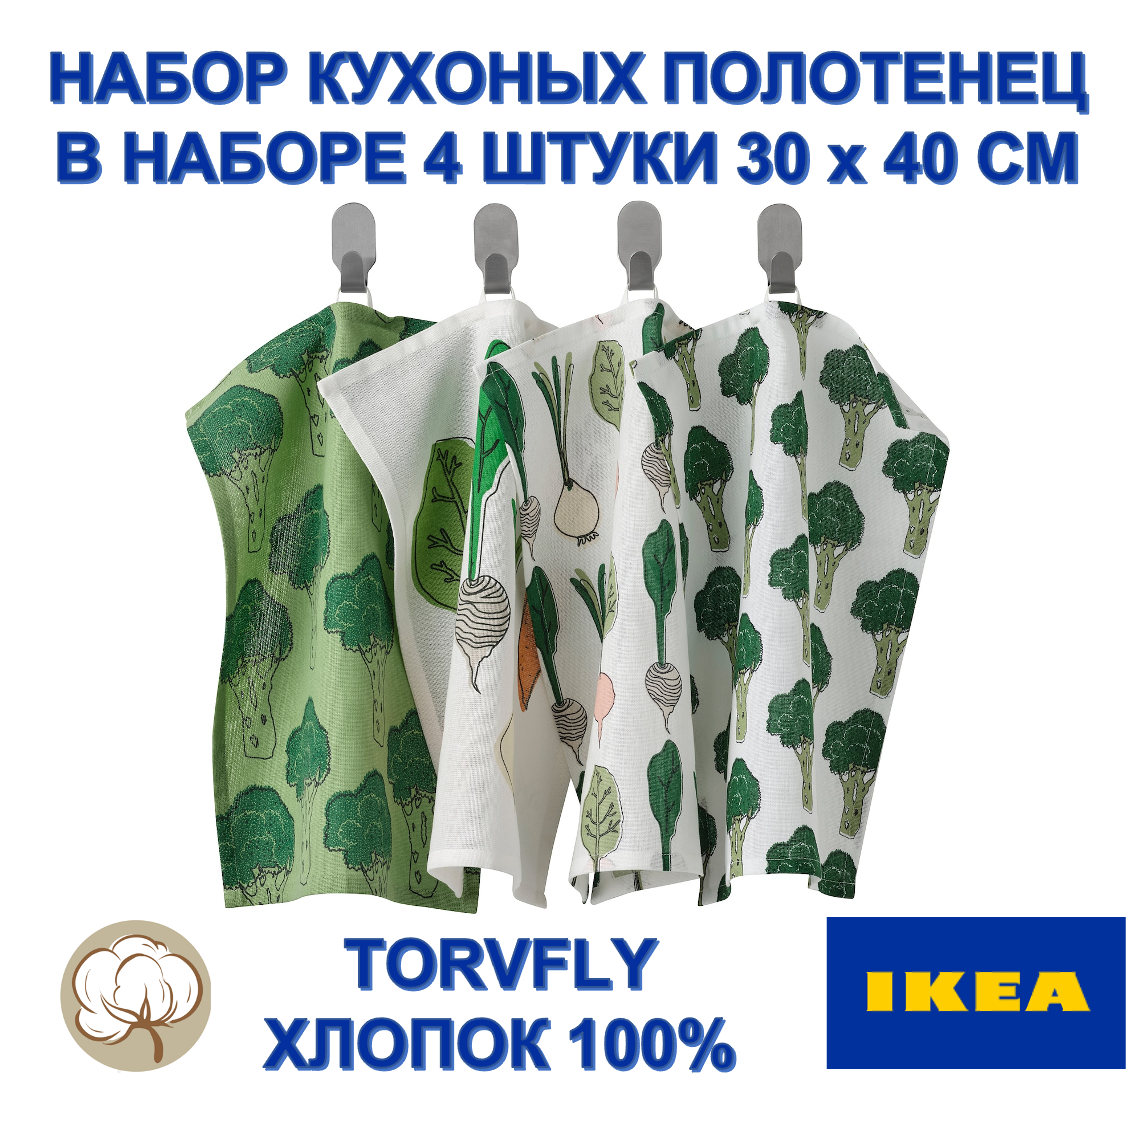 Набор кухонных полотенец IKEA TORVFLY, с рисунком/зеленое, 30x40 см